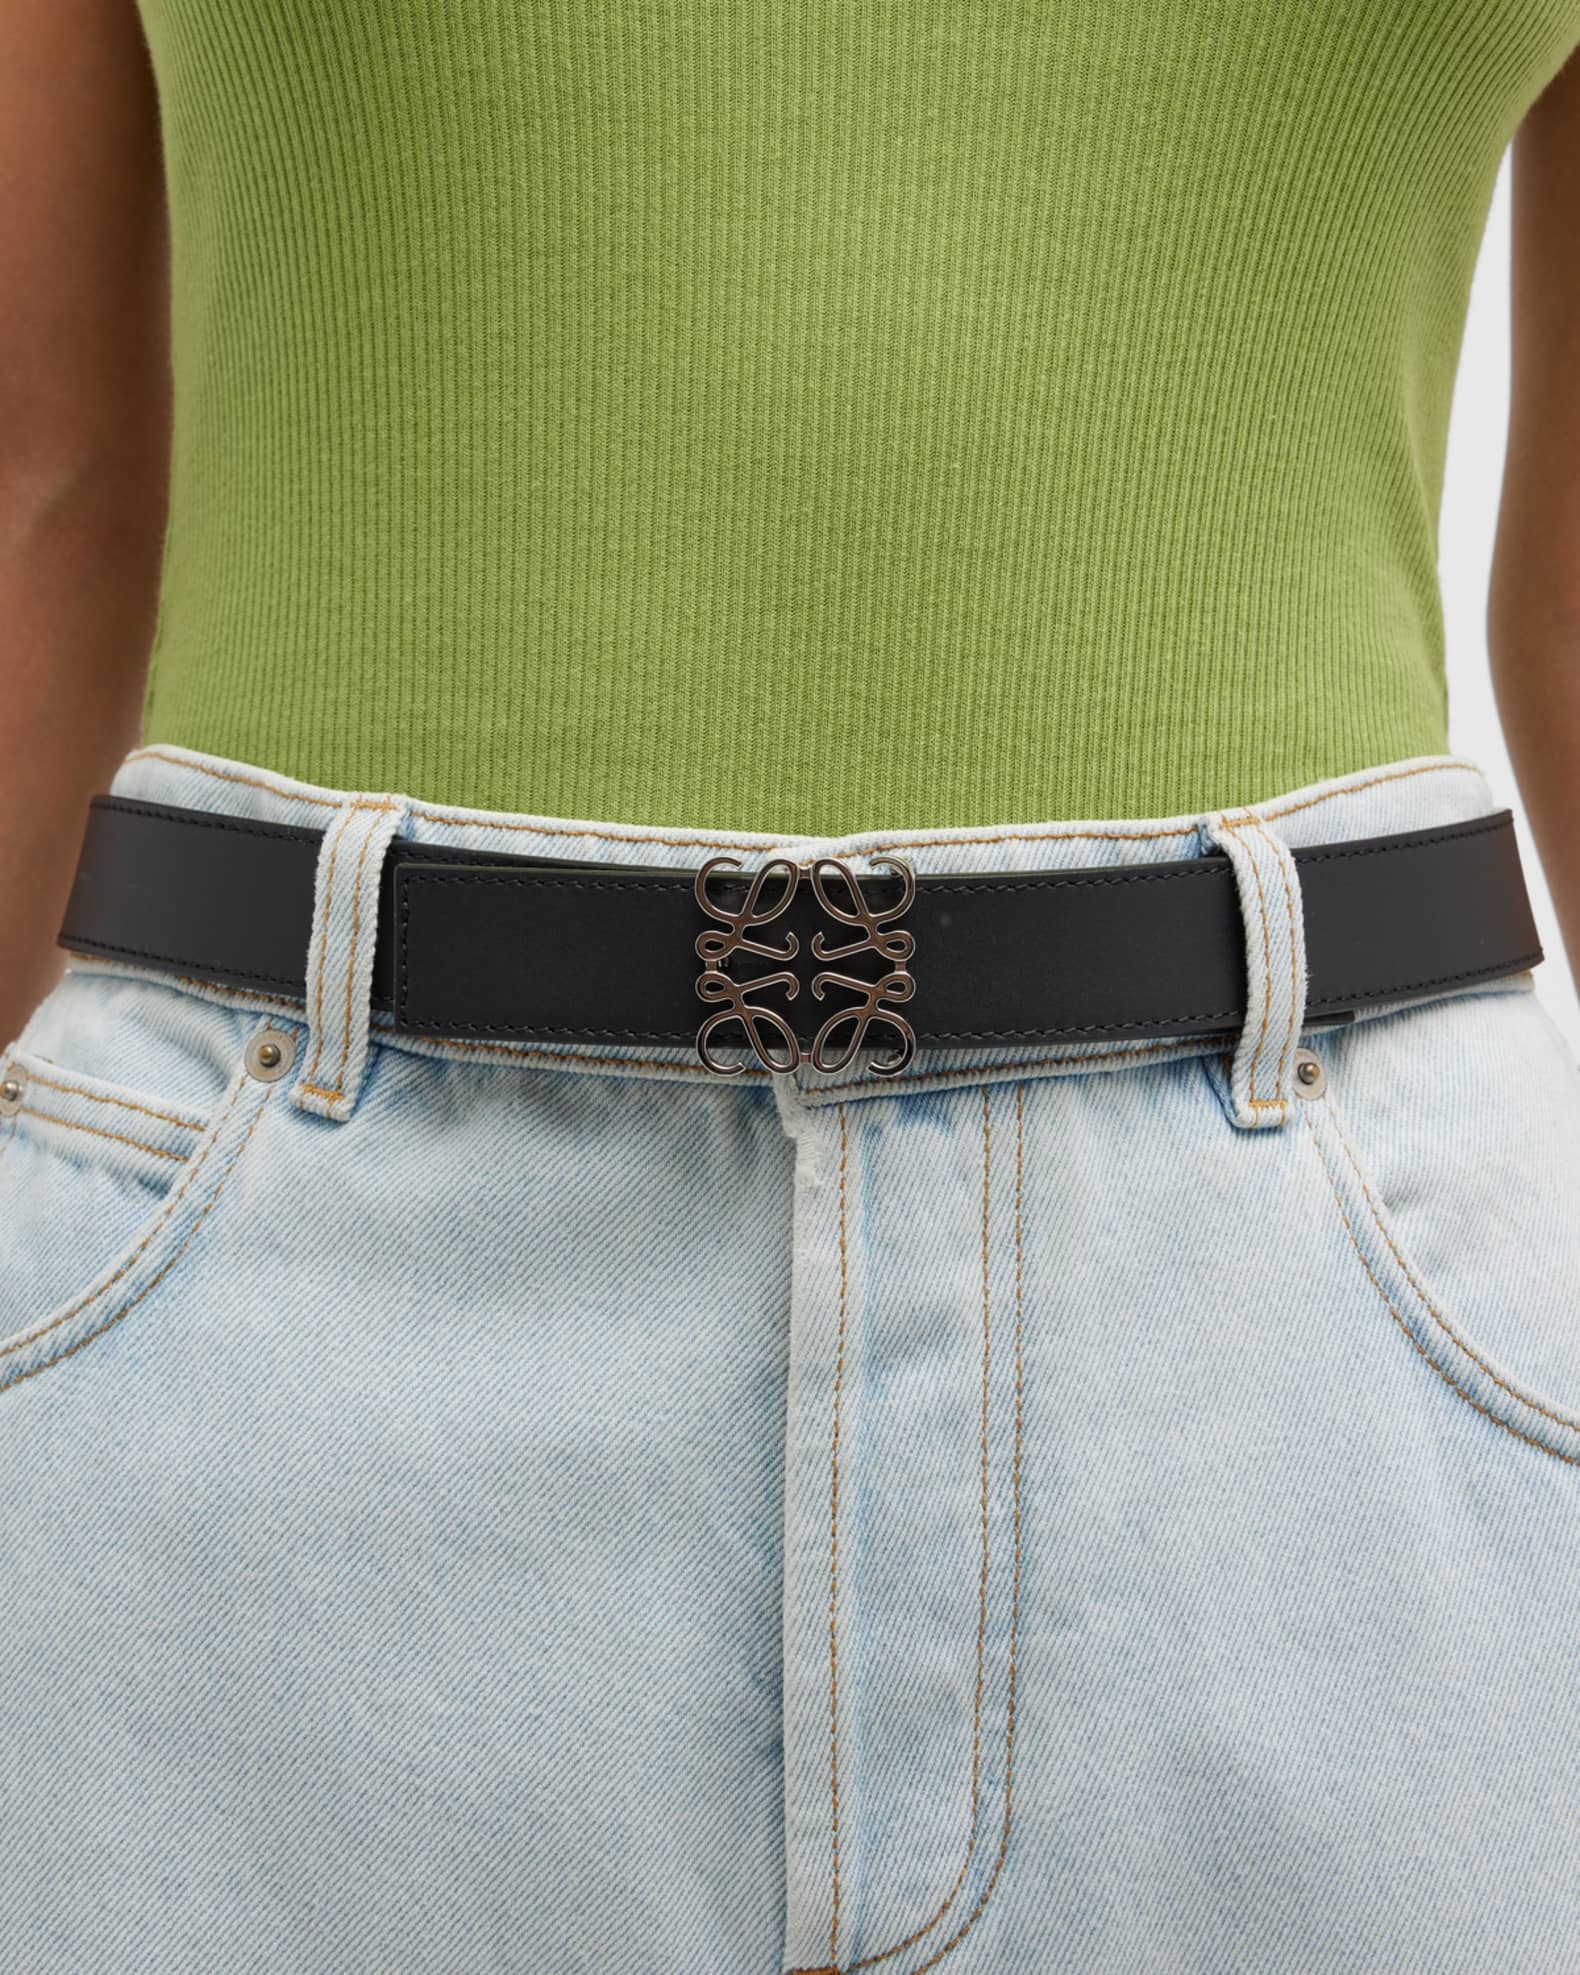 Loewe Reversible Anagram Leather Belt | Neiman Marcus